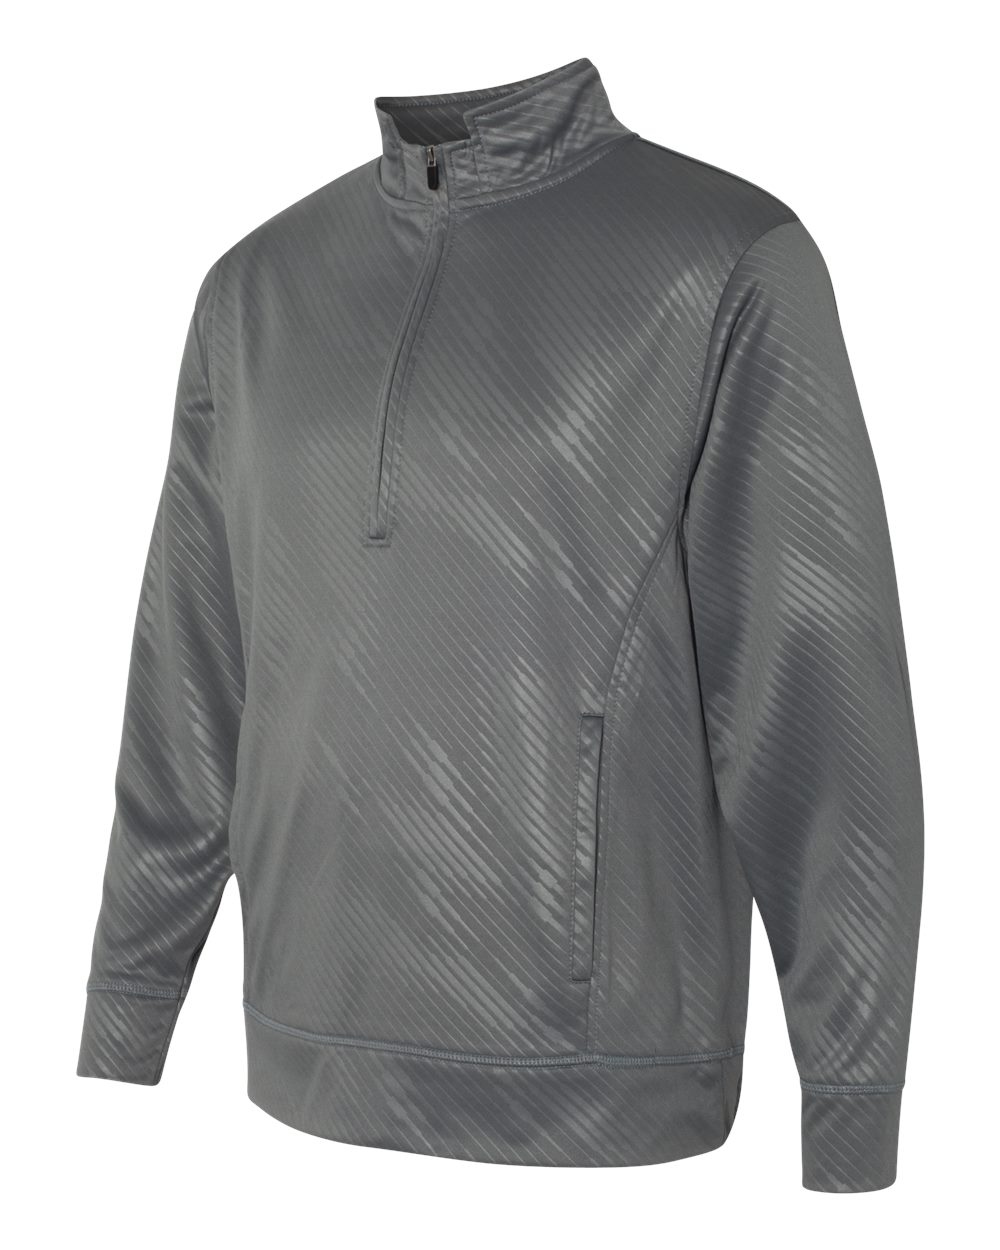 J. America 8669 - Volt Polyester Quarter-Zip Sweatshirt $26.72 -